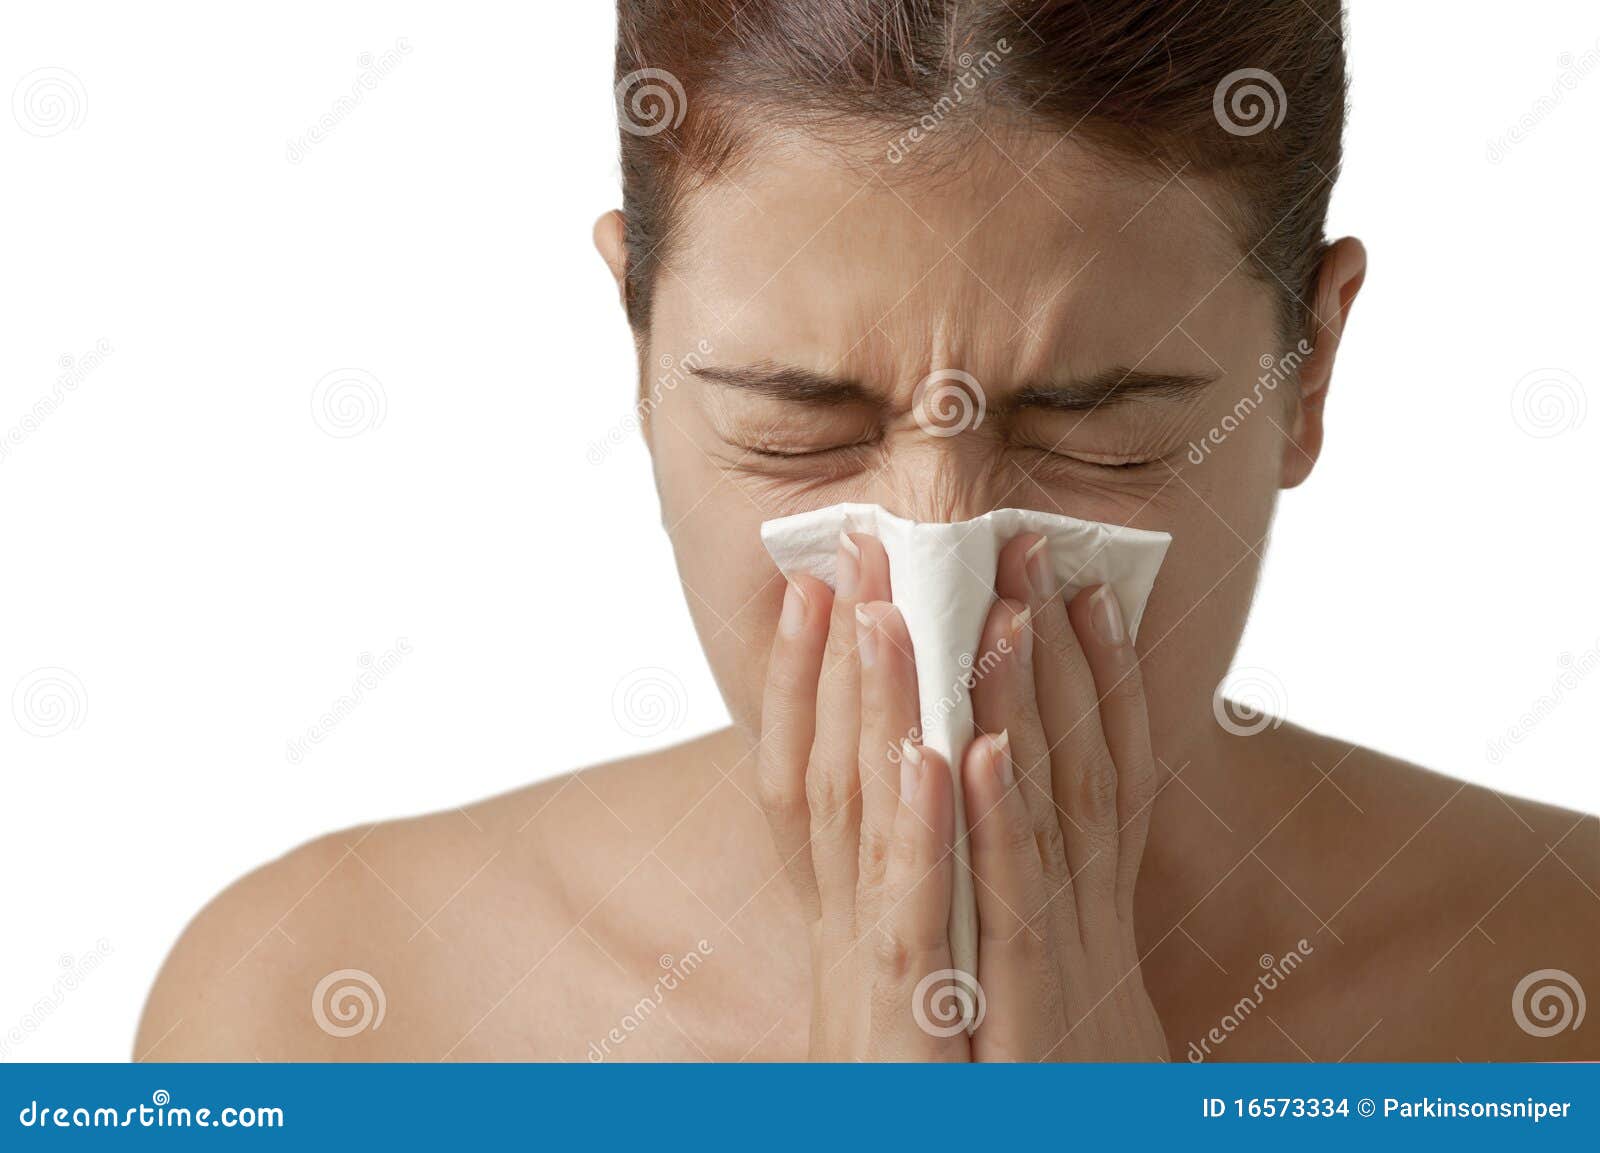 corona virus flu symptoms